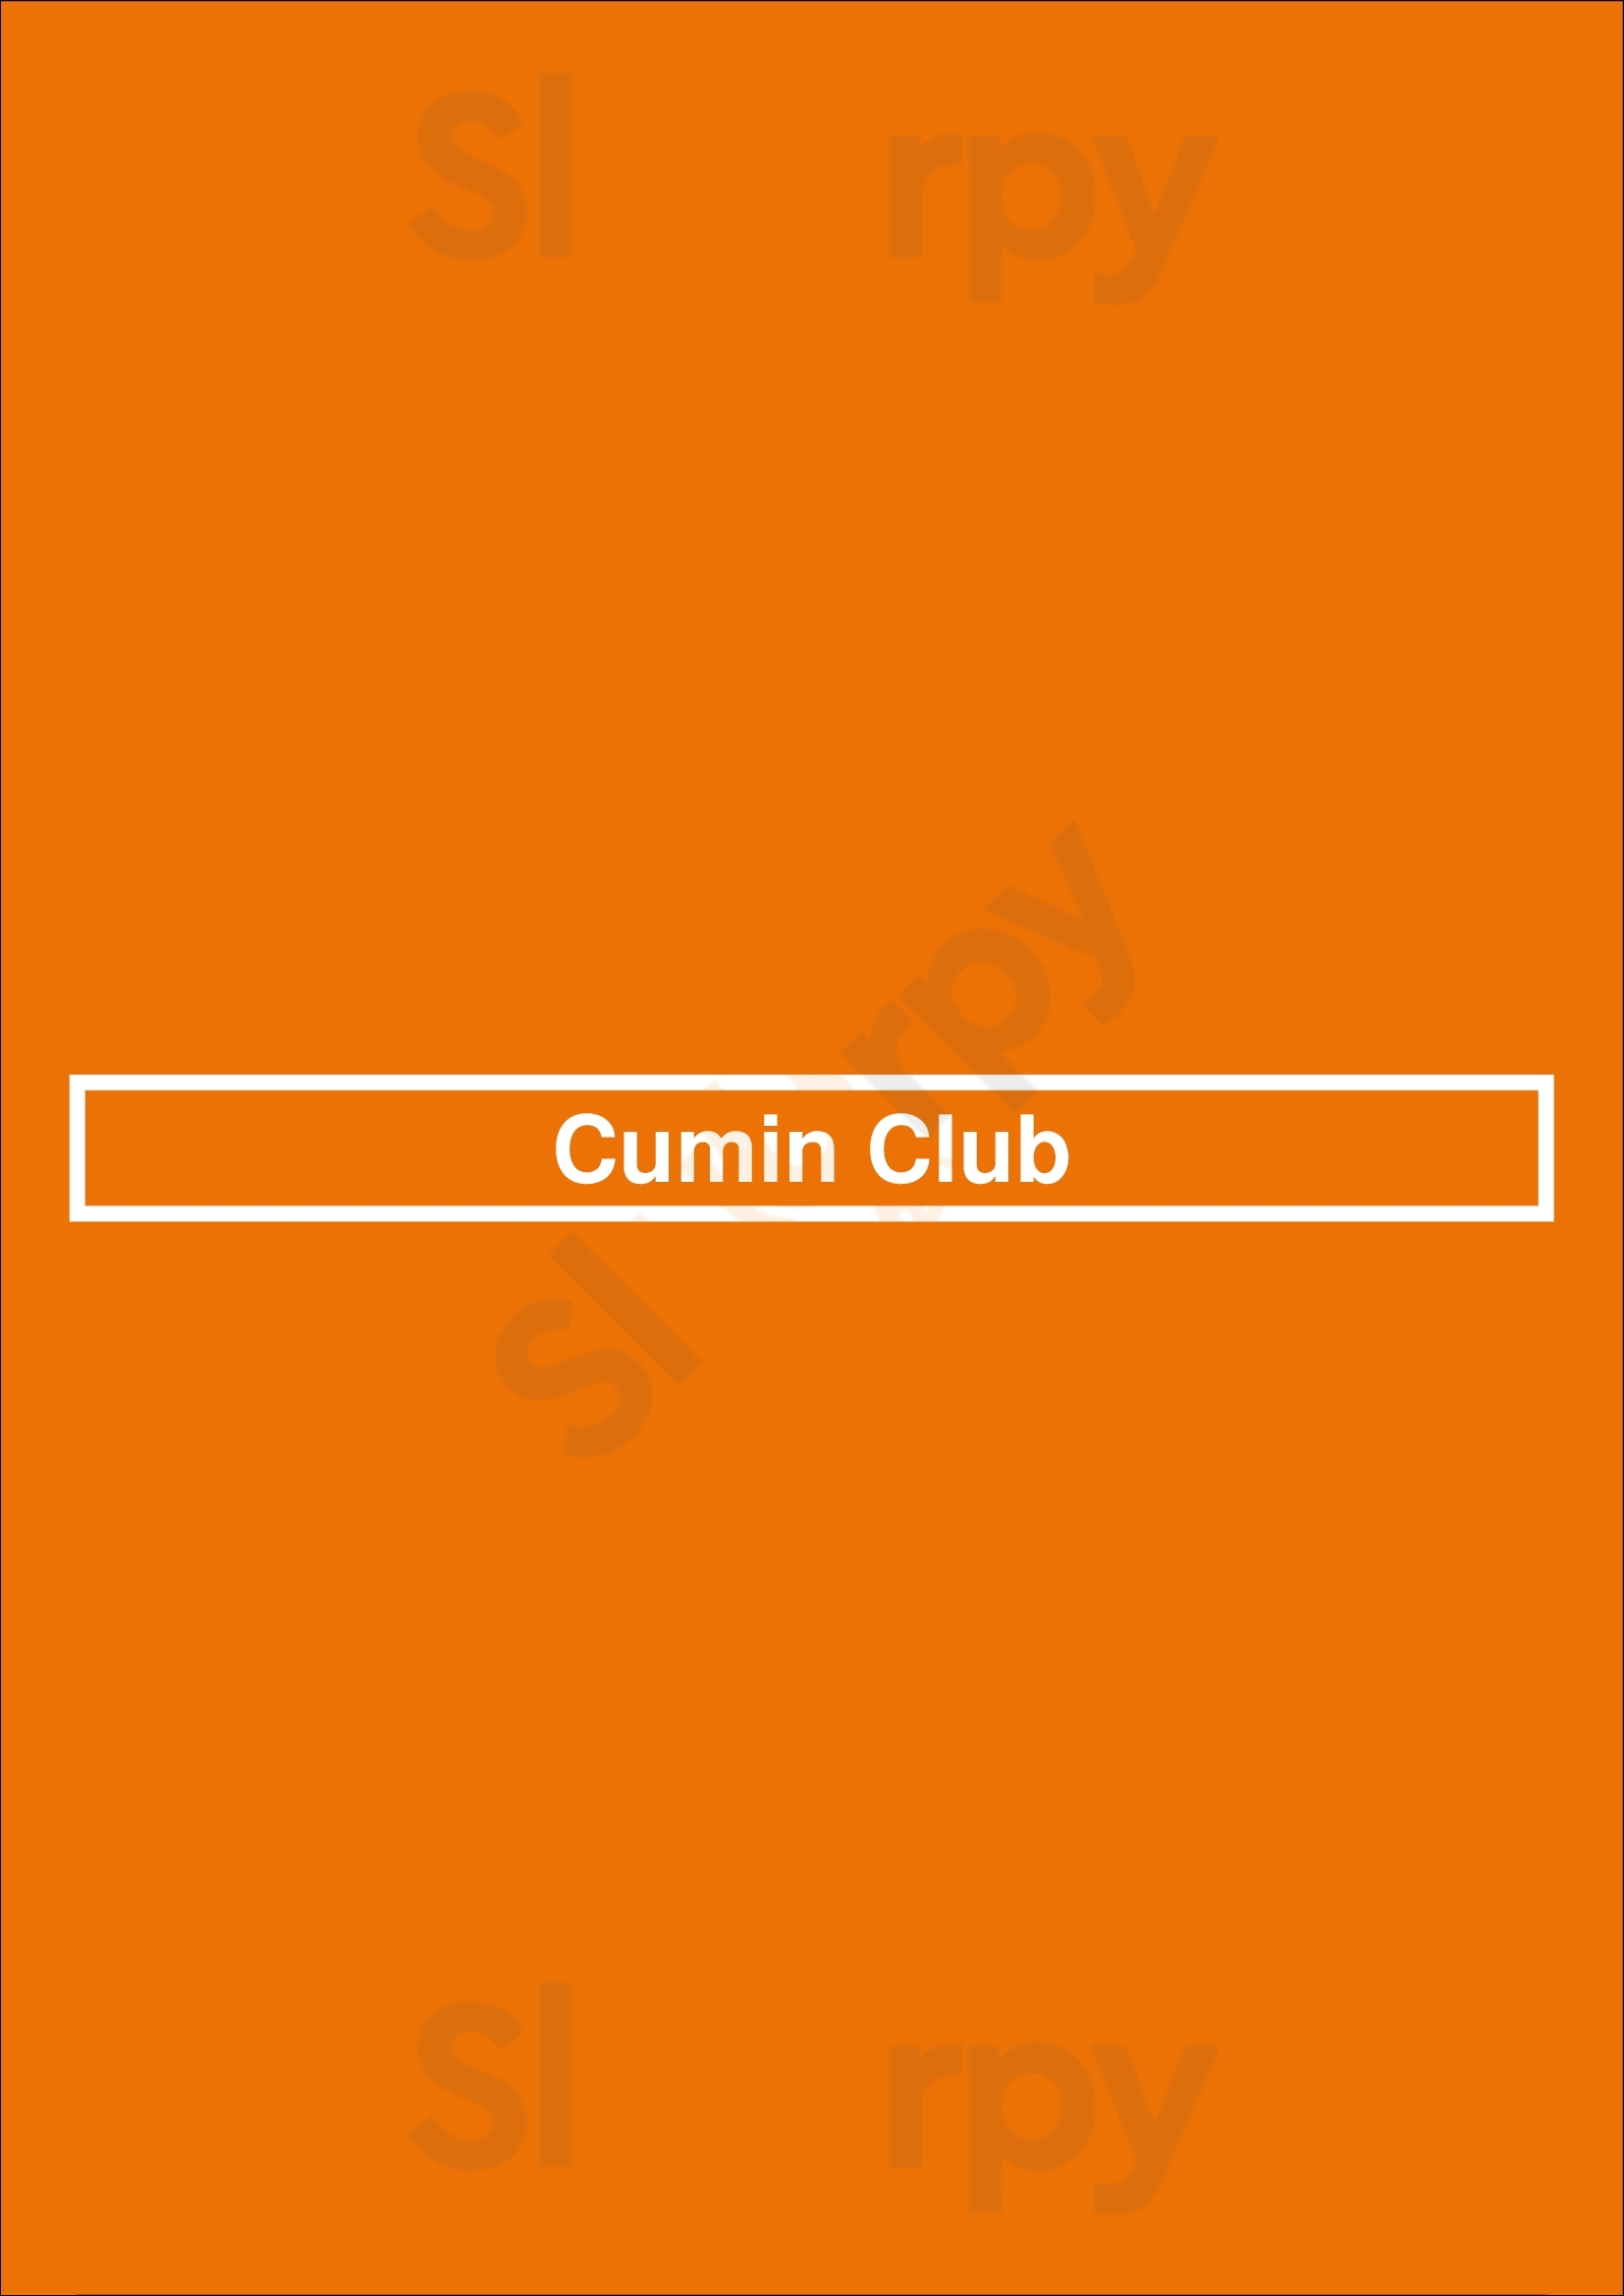 Cumin Club Clapham Menu - 1